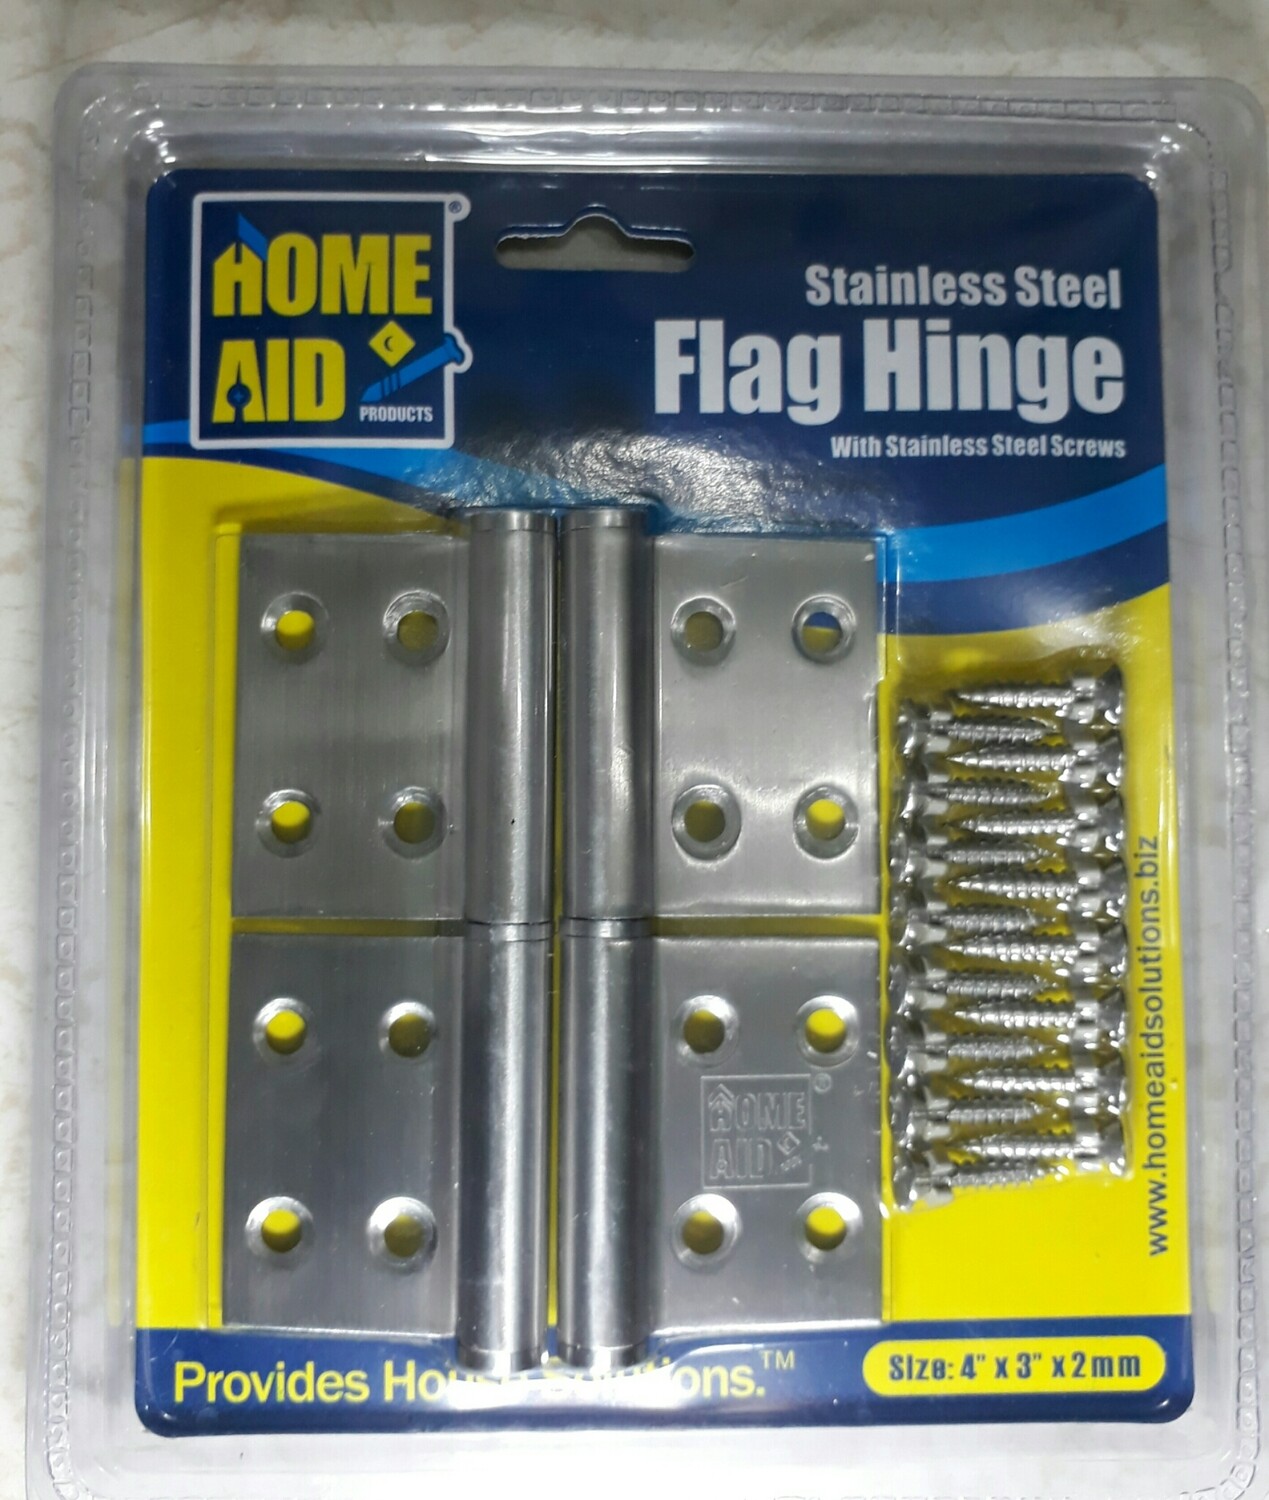 Homeaid Stainless Steel FLAG HINGE 4"x3"x2mm